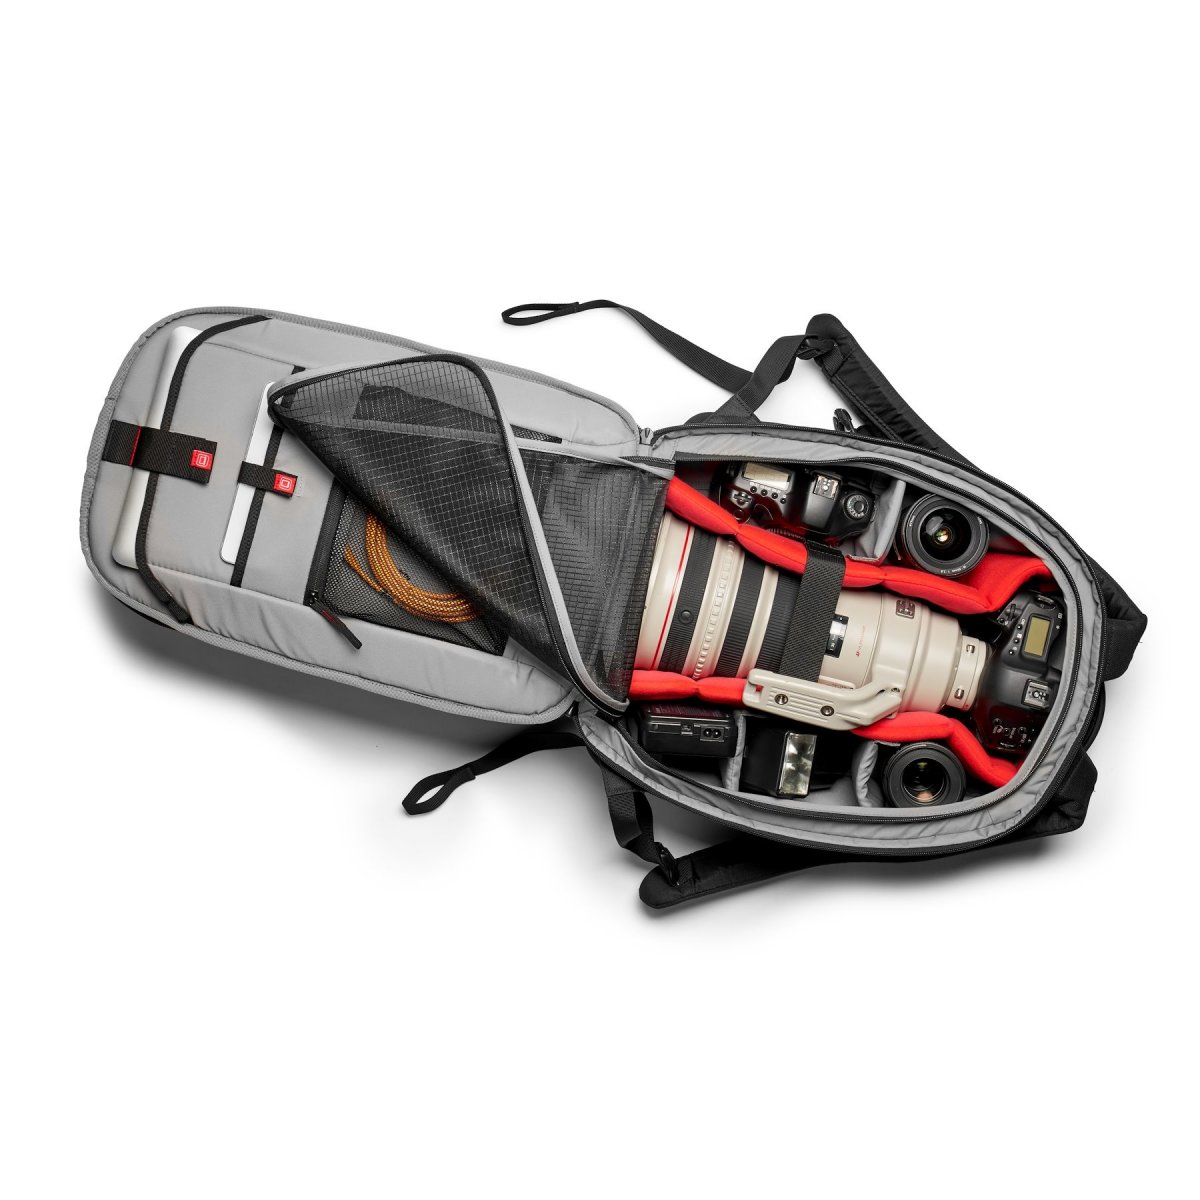 Fotobatoh Manfrotto Pro Light backpack RedBee-310 pro DSLRc nebo dron DJI Mavic series shora